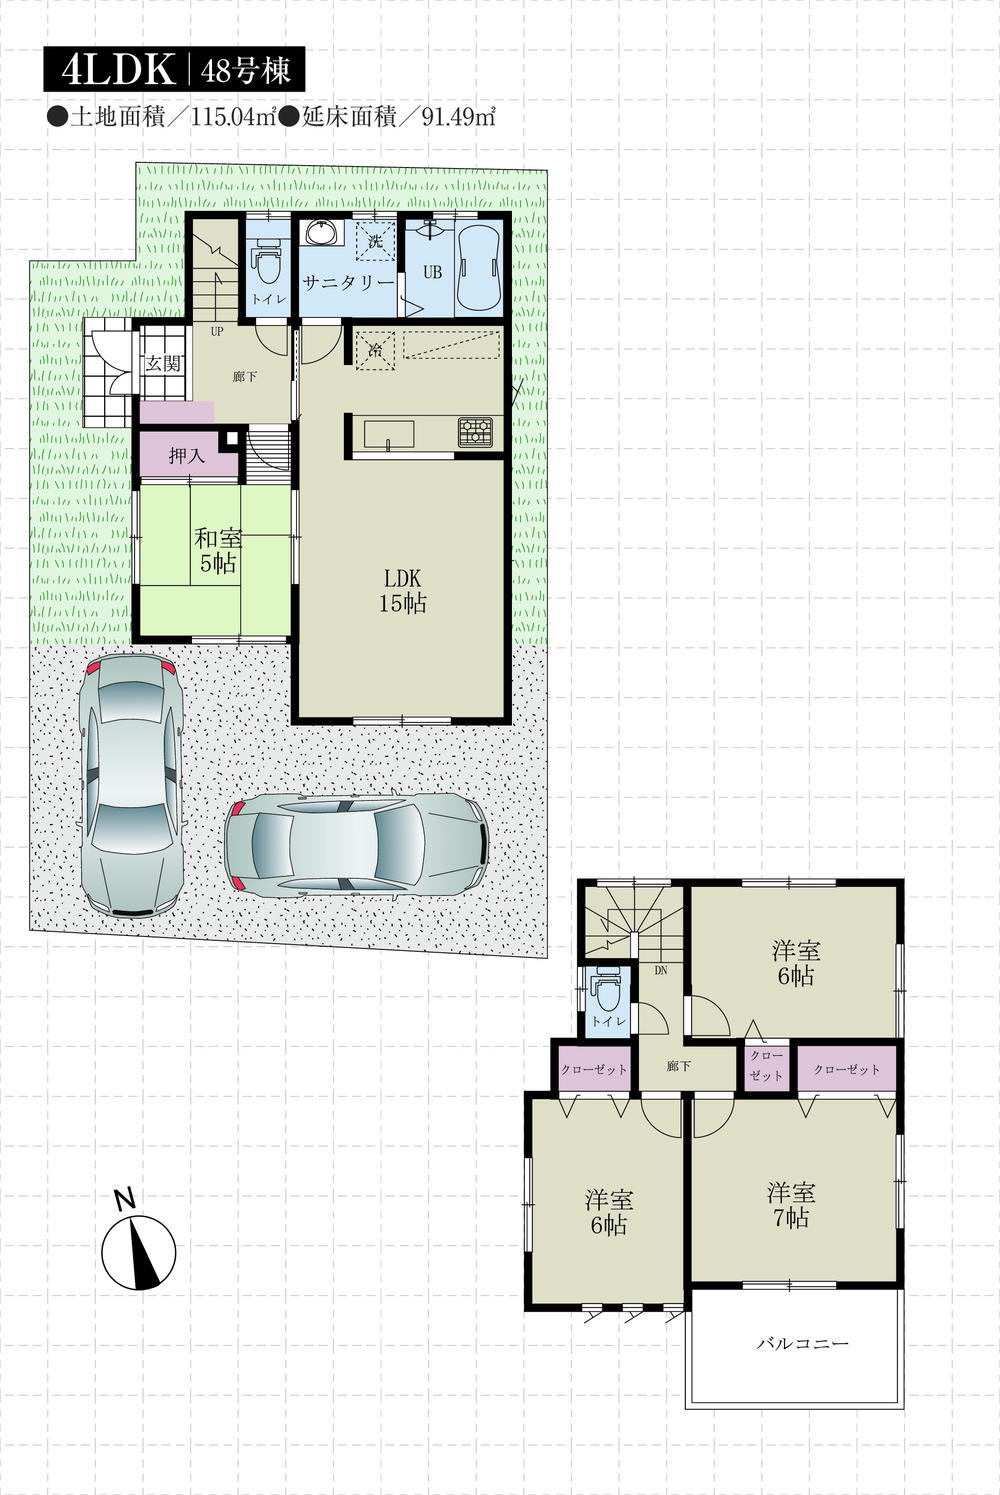 Floor plan. (48 Building), Price 41,300,000 yen, 4LDK, Land area 115.04 sq m , Building area 91.91 sq m